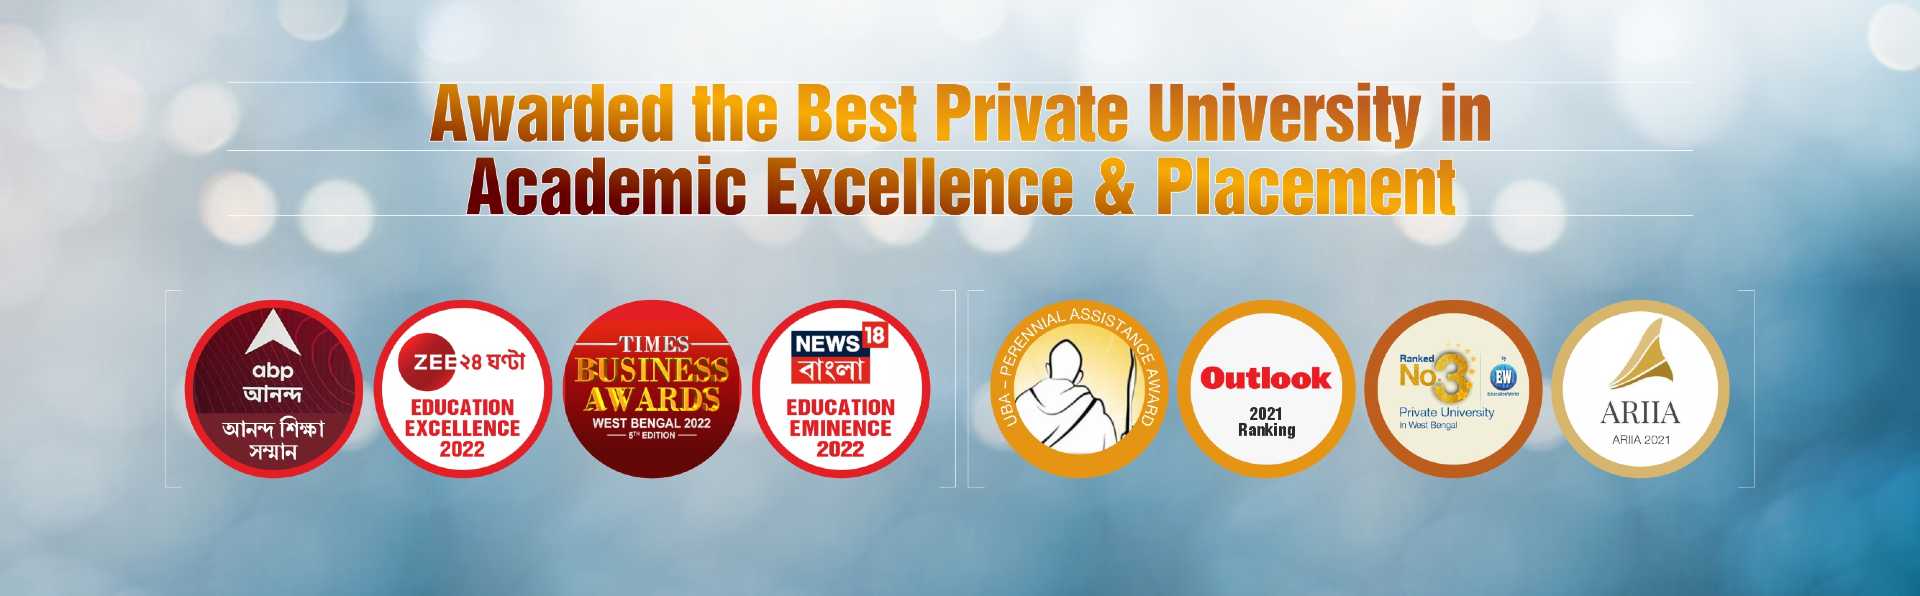 best-private-university-awarded